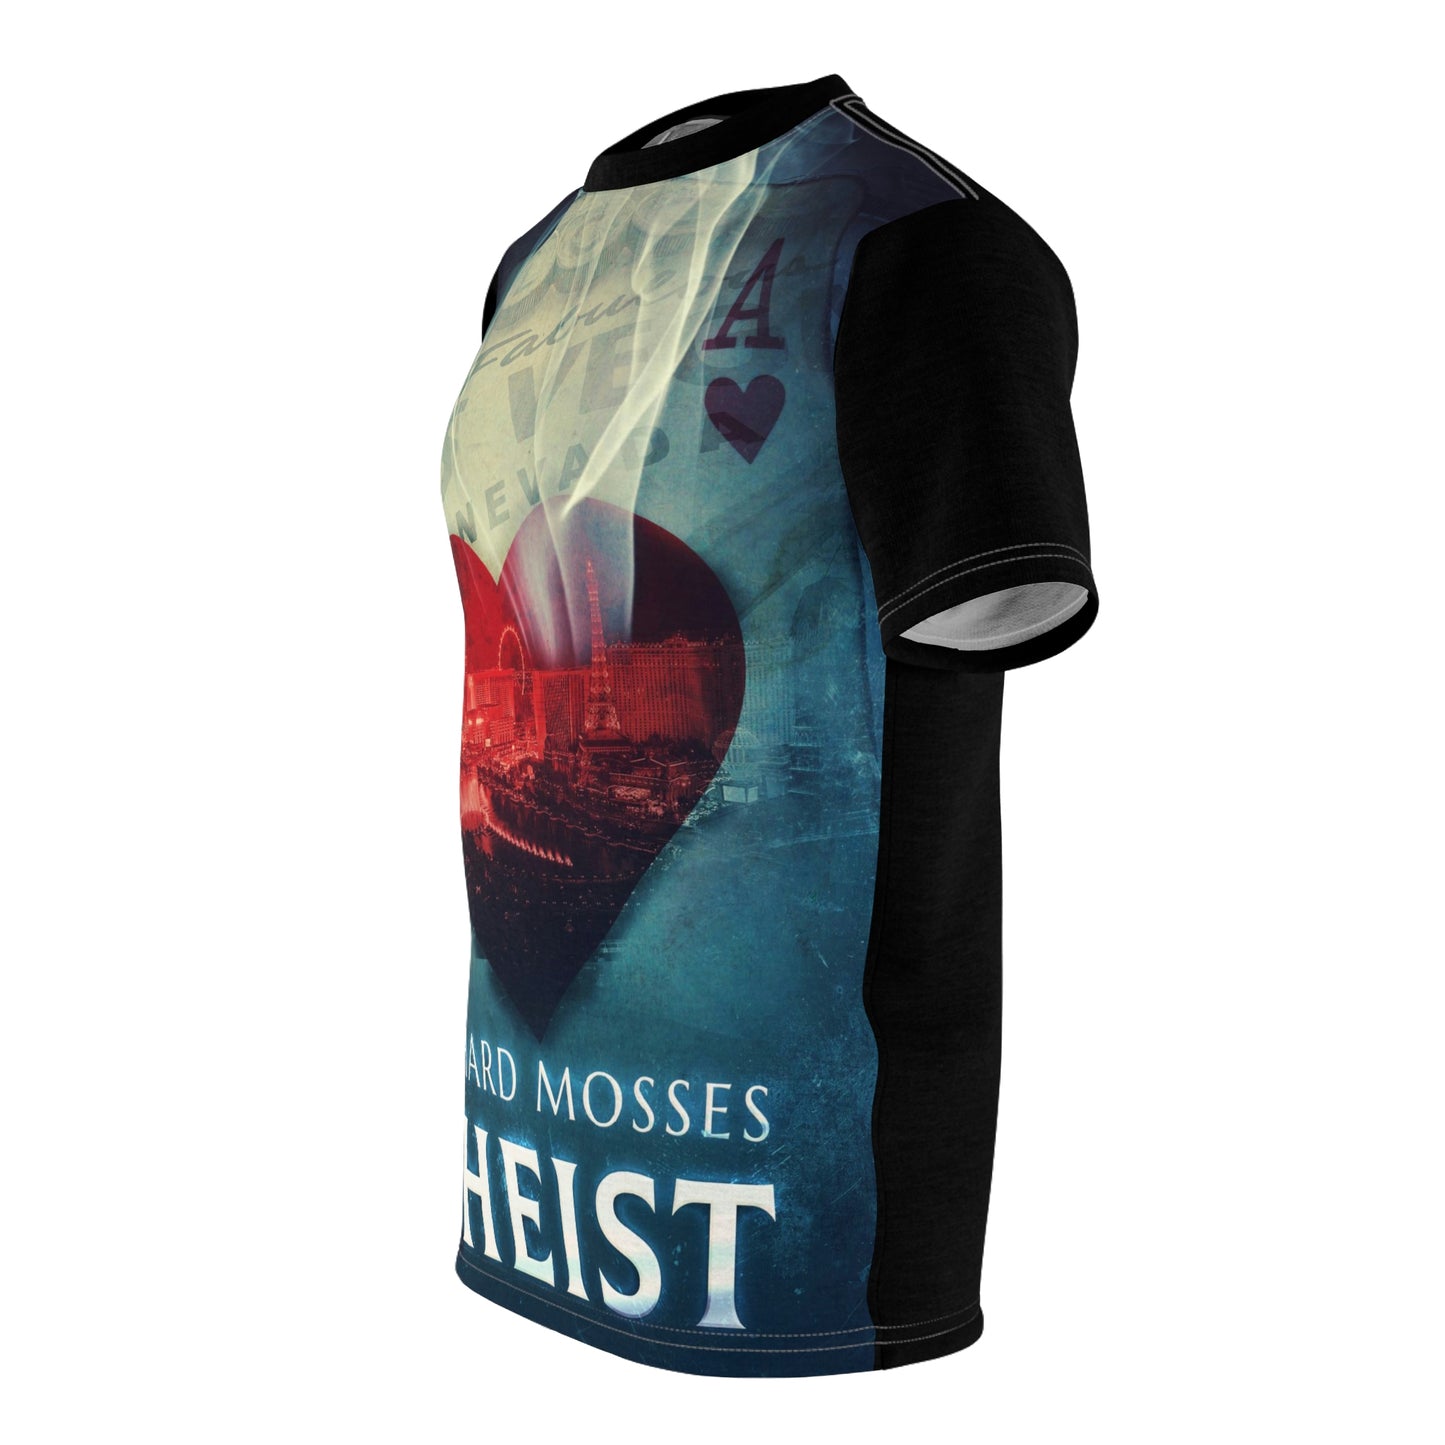 Gheist - Unisex All-Over Print Cut & Sew T-Shirt